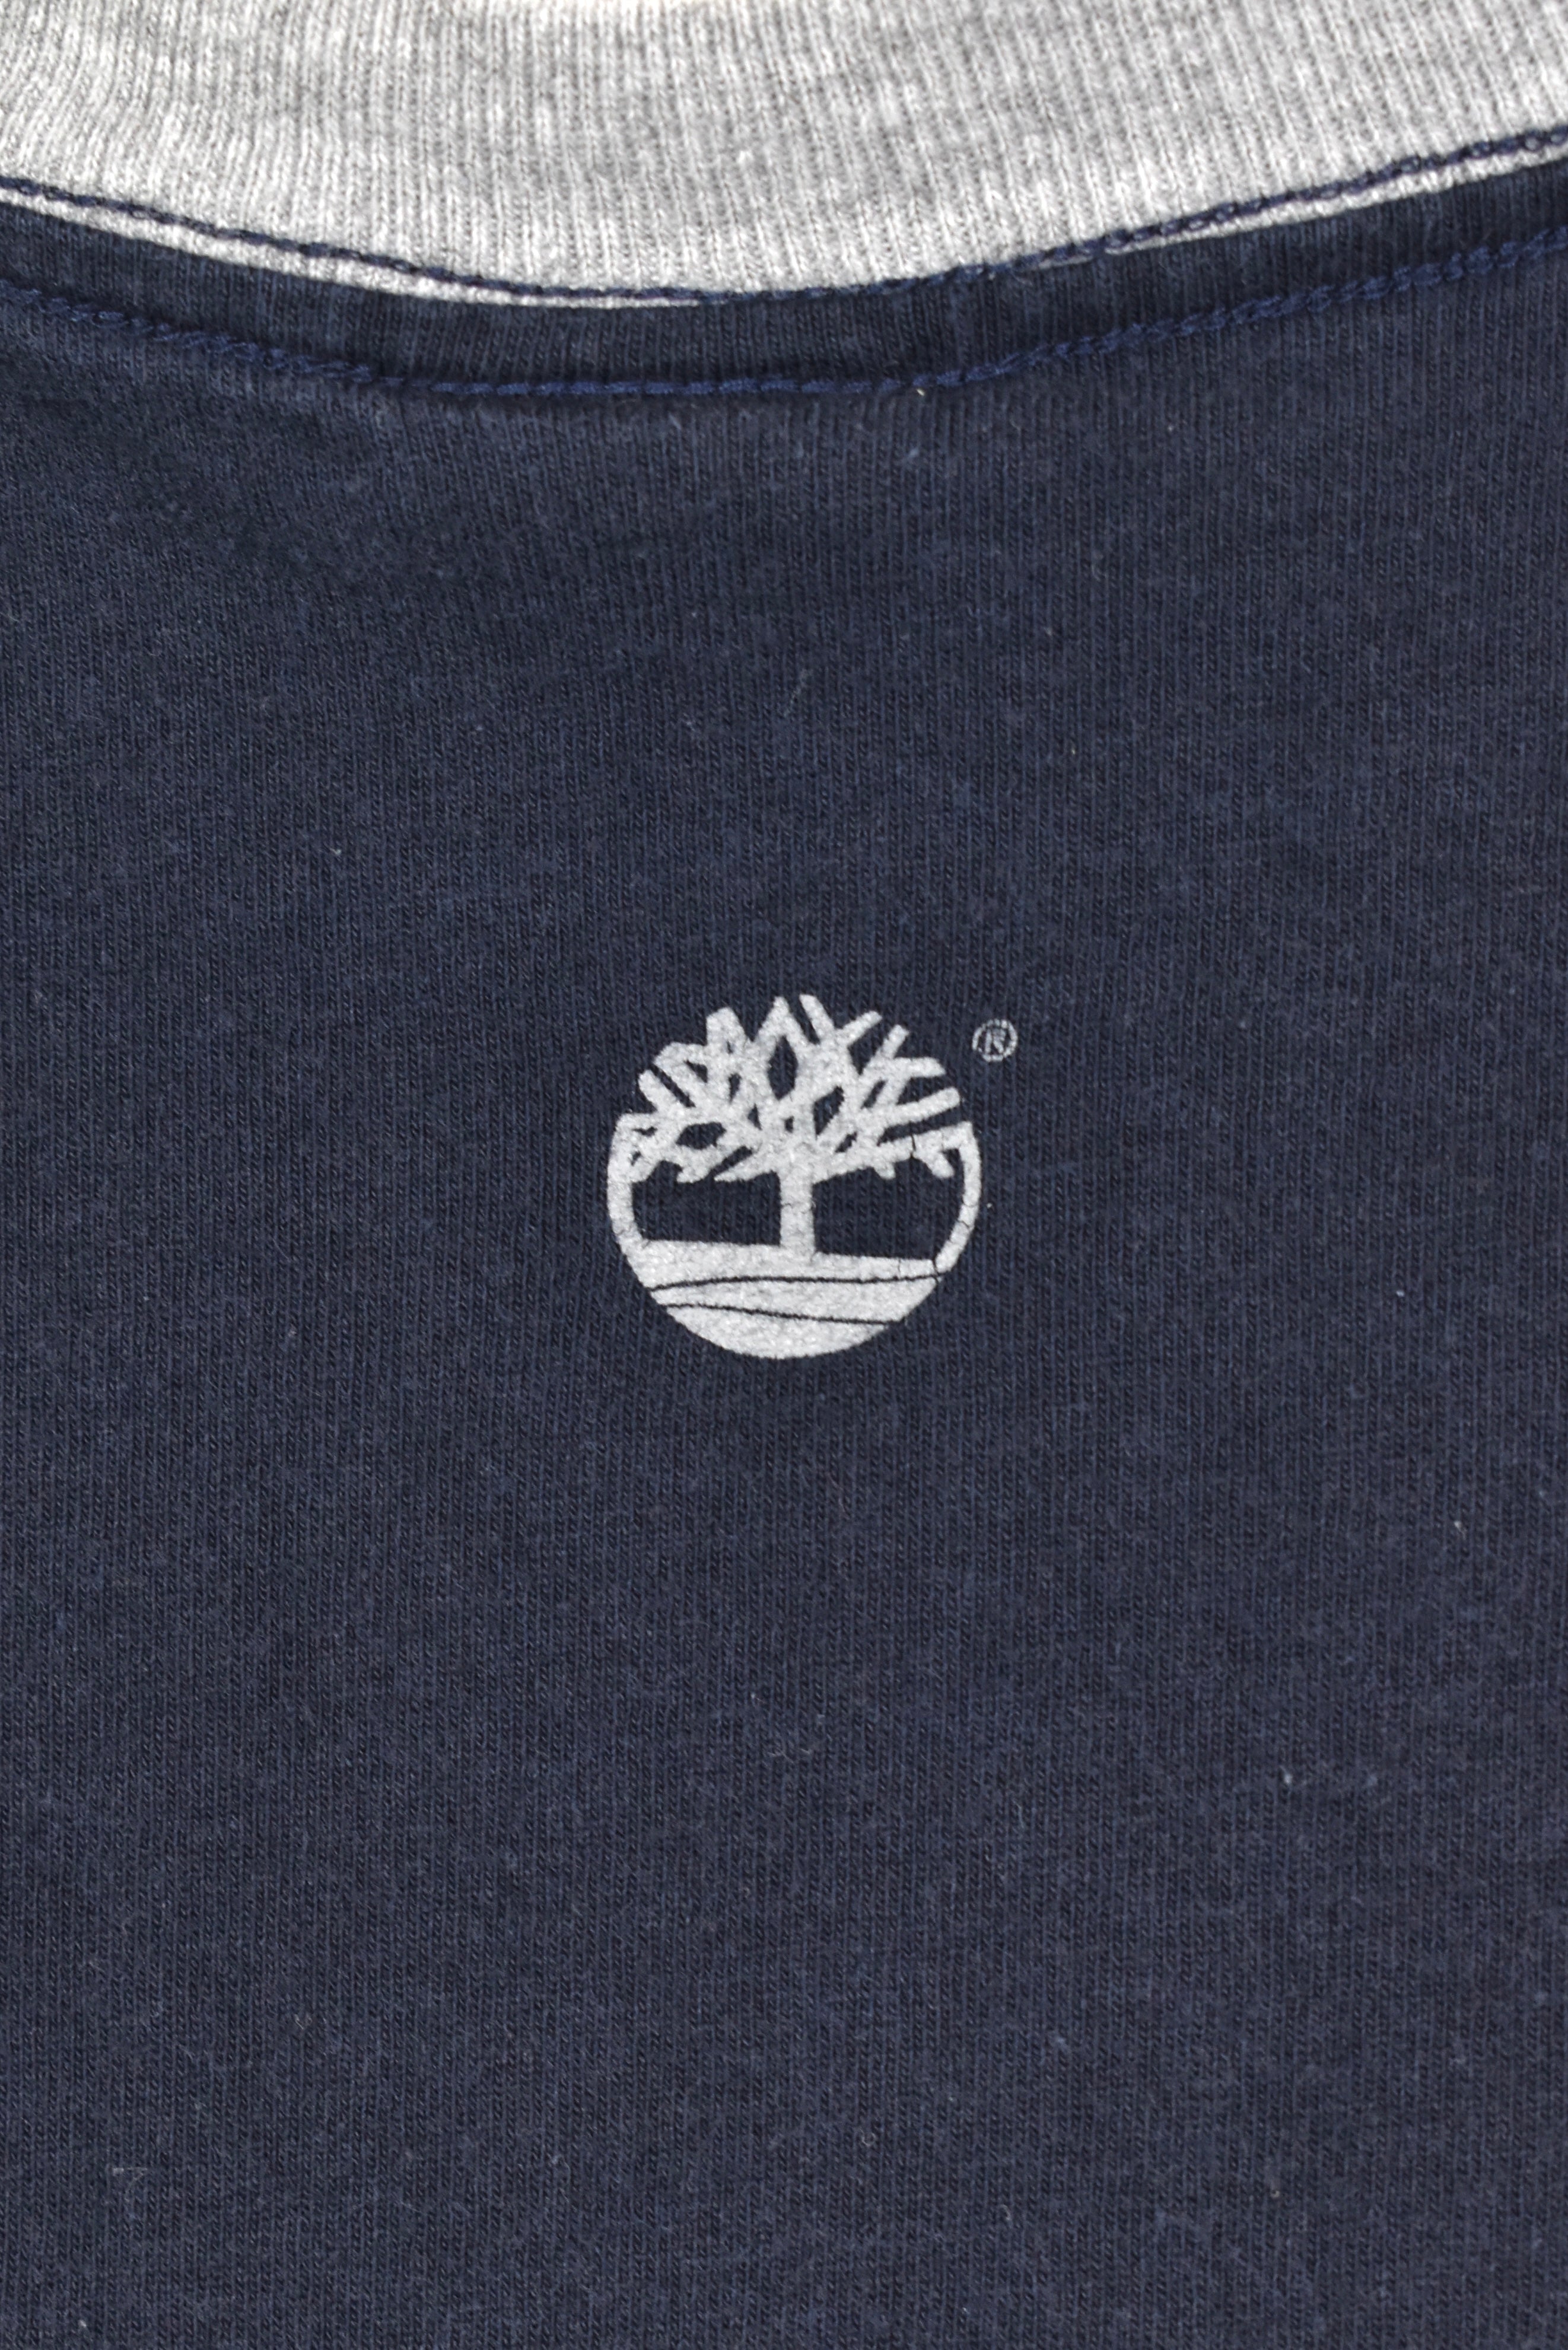 Vintage Timberland shirt, short sleeve graphic tee - XXL, navy blue TIMBERLAND